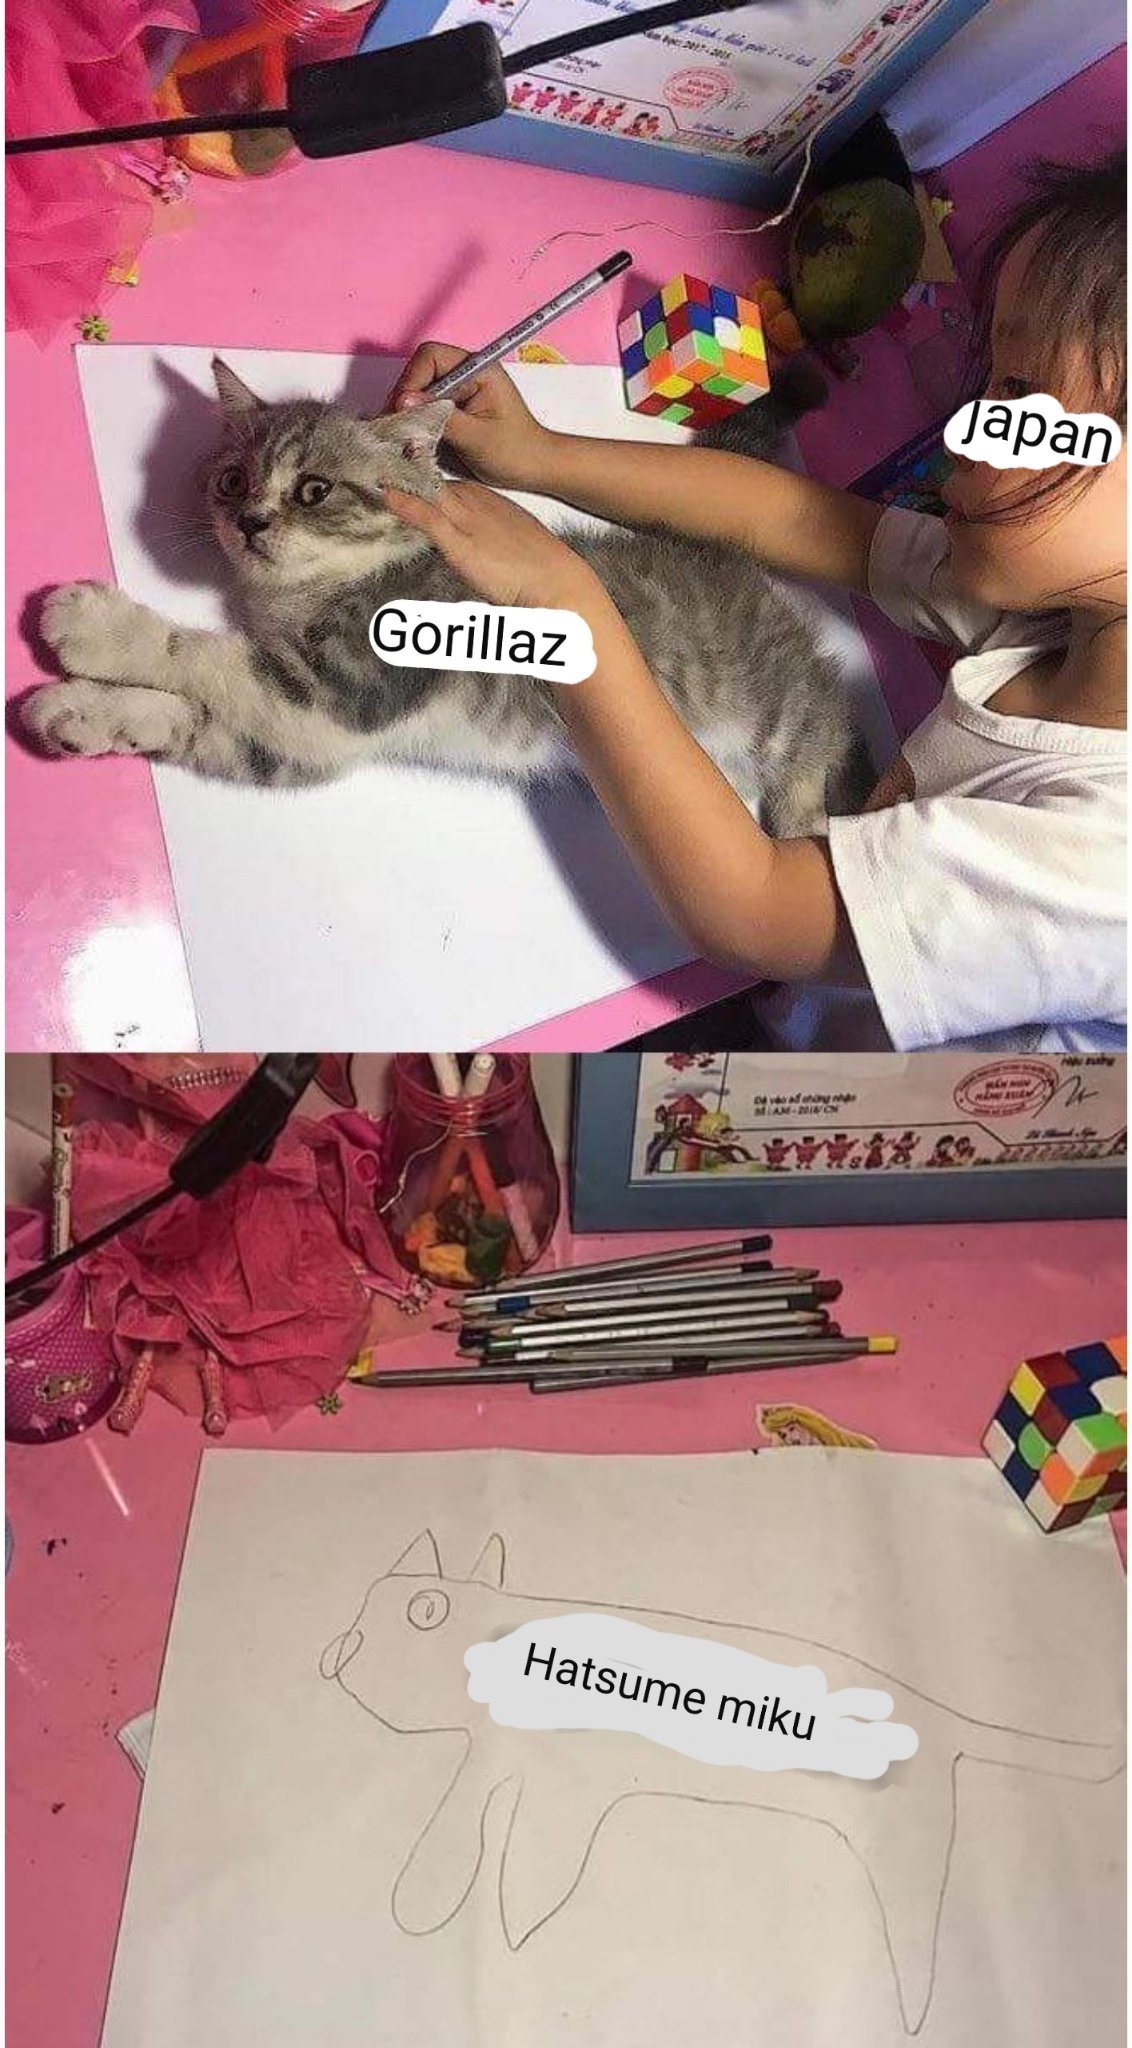 Name your favorite gorillaz song - meme